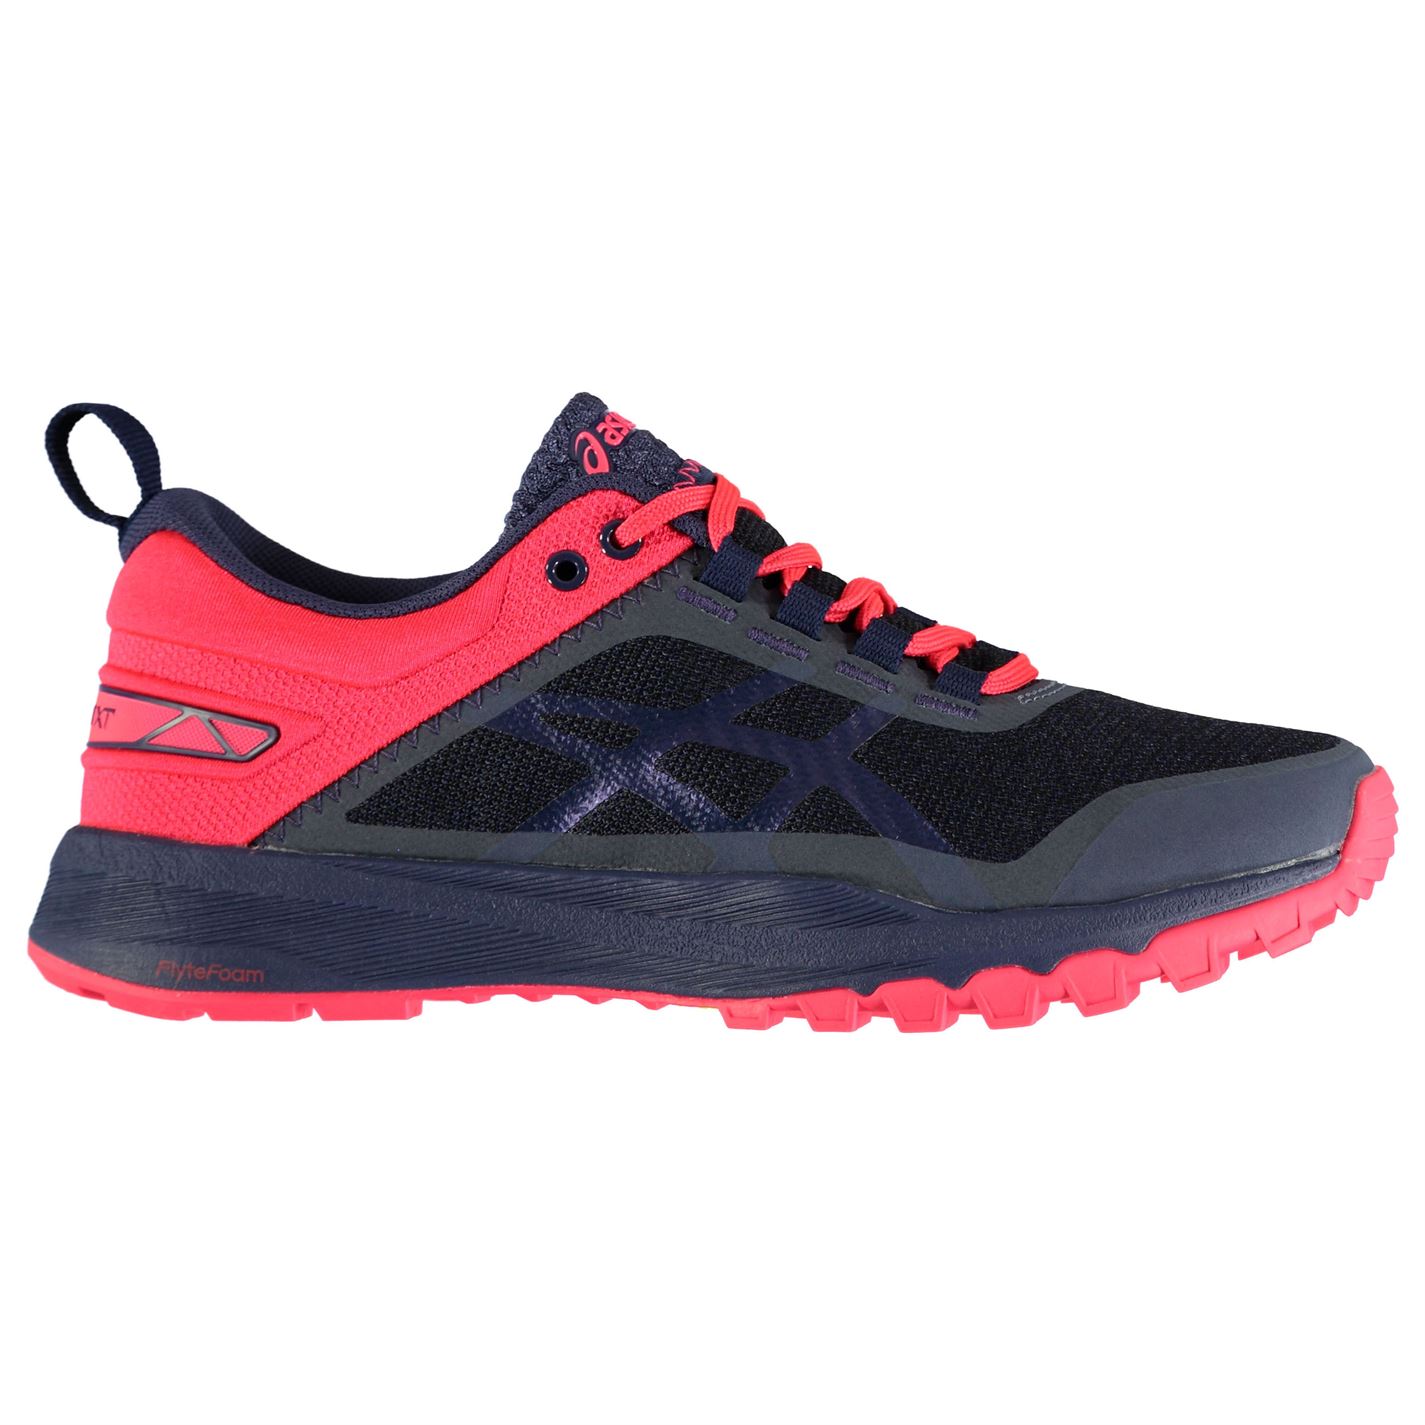 Asics Gecko XT Ladies Trail Running Shoes